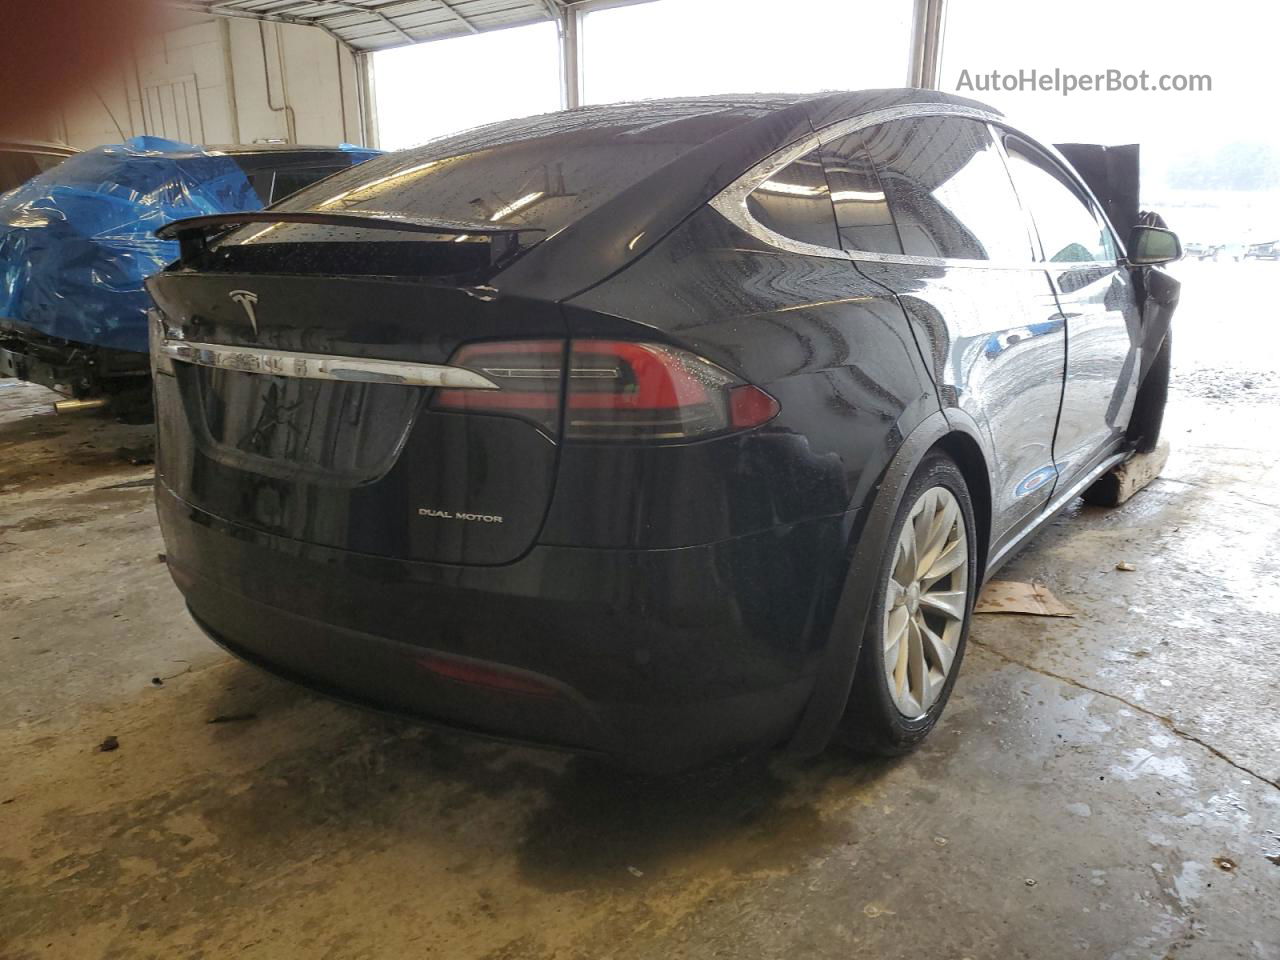 2021 Tesla Model X  Черный vin: 5YJXCDE28MF321590